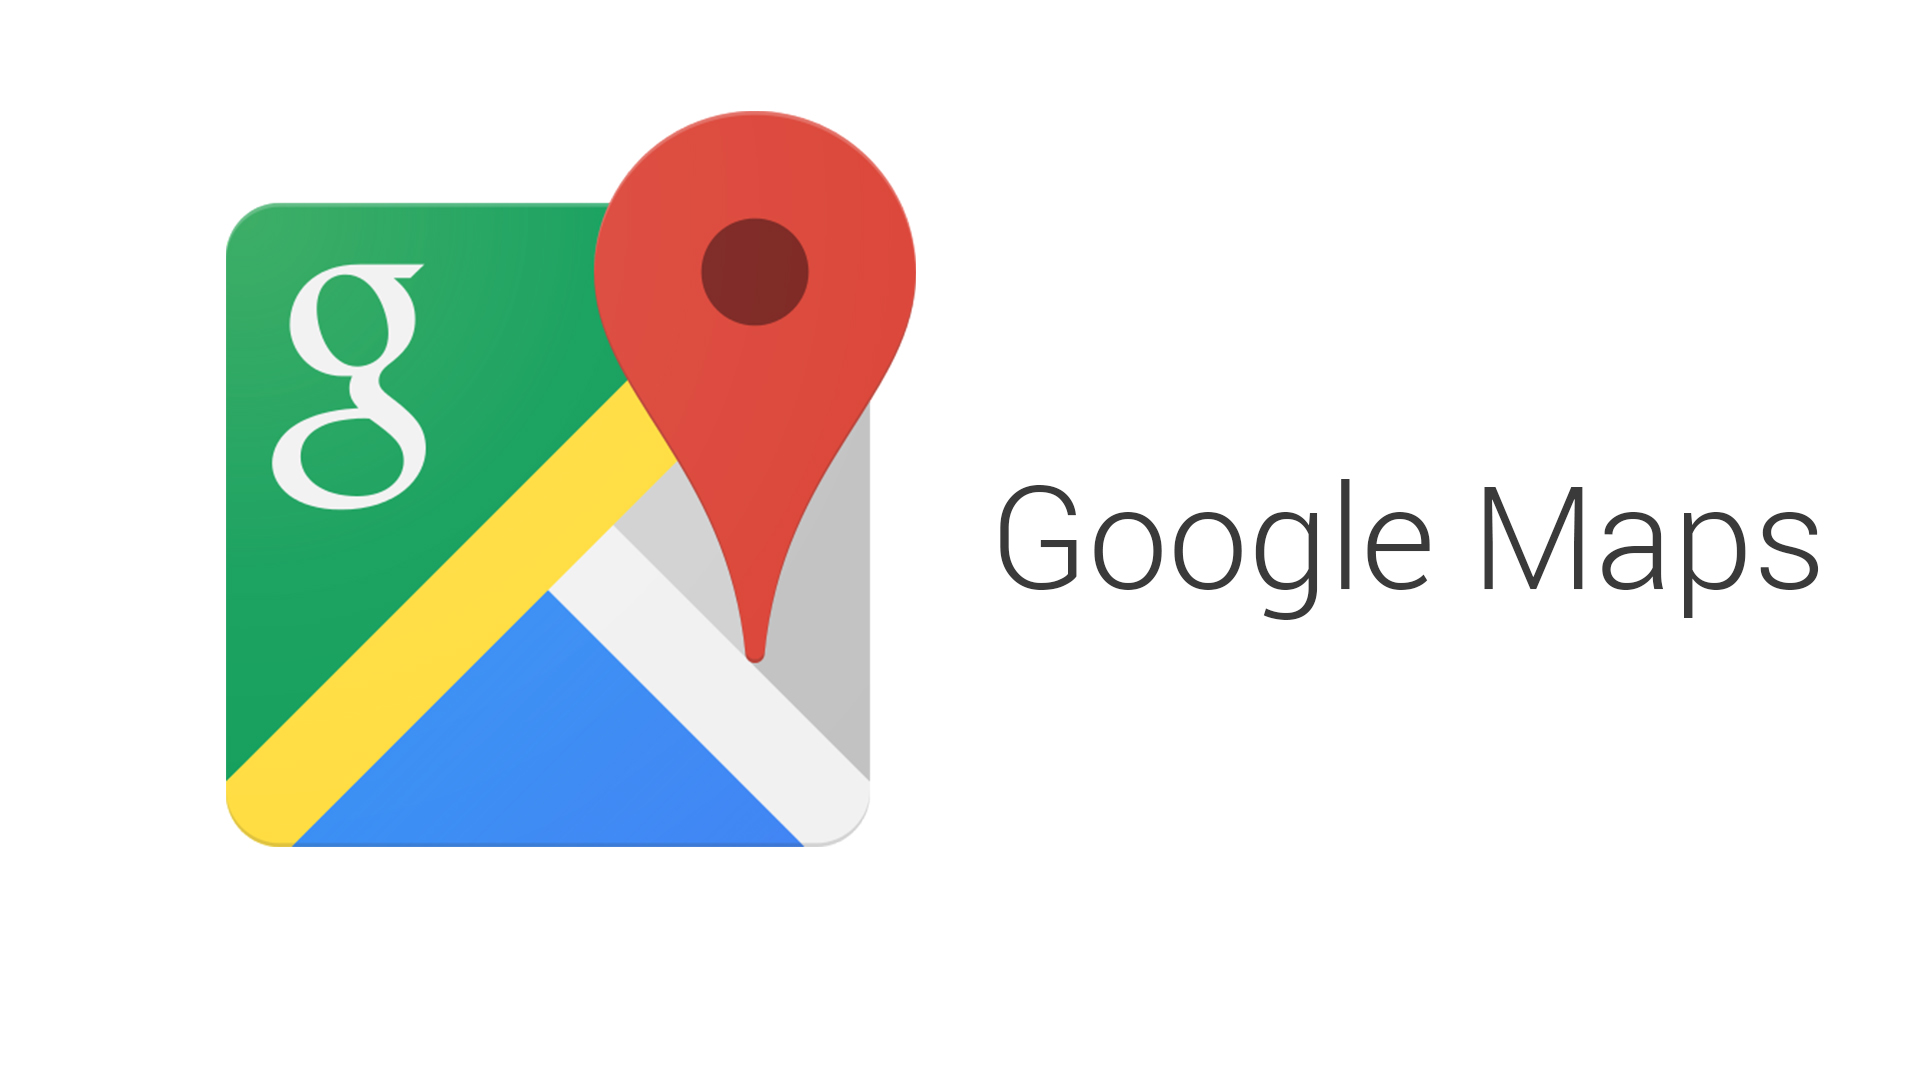 Google Maps | Wi-fi Only | Google Maps อัพเดทใหม่เพิ่มฟีเจอร์ Wi-fi Only และโหลดแมพเก็บไว้ใน microSD ได้แล้ว